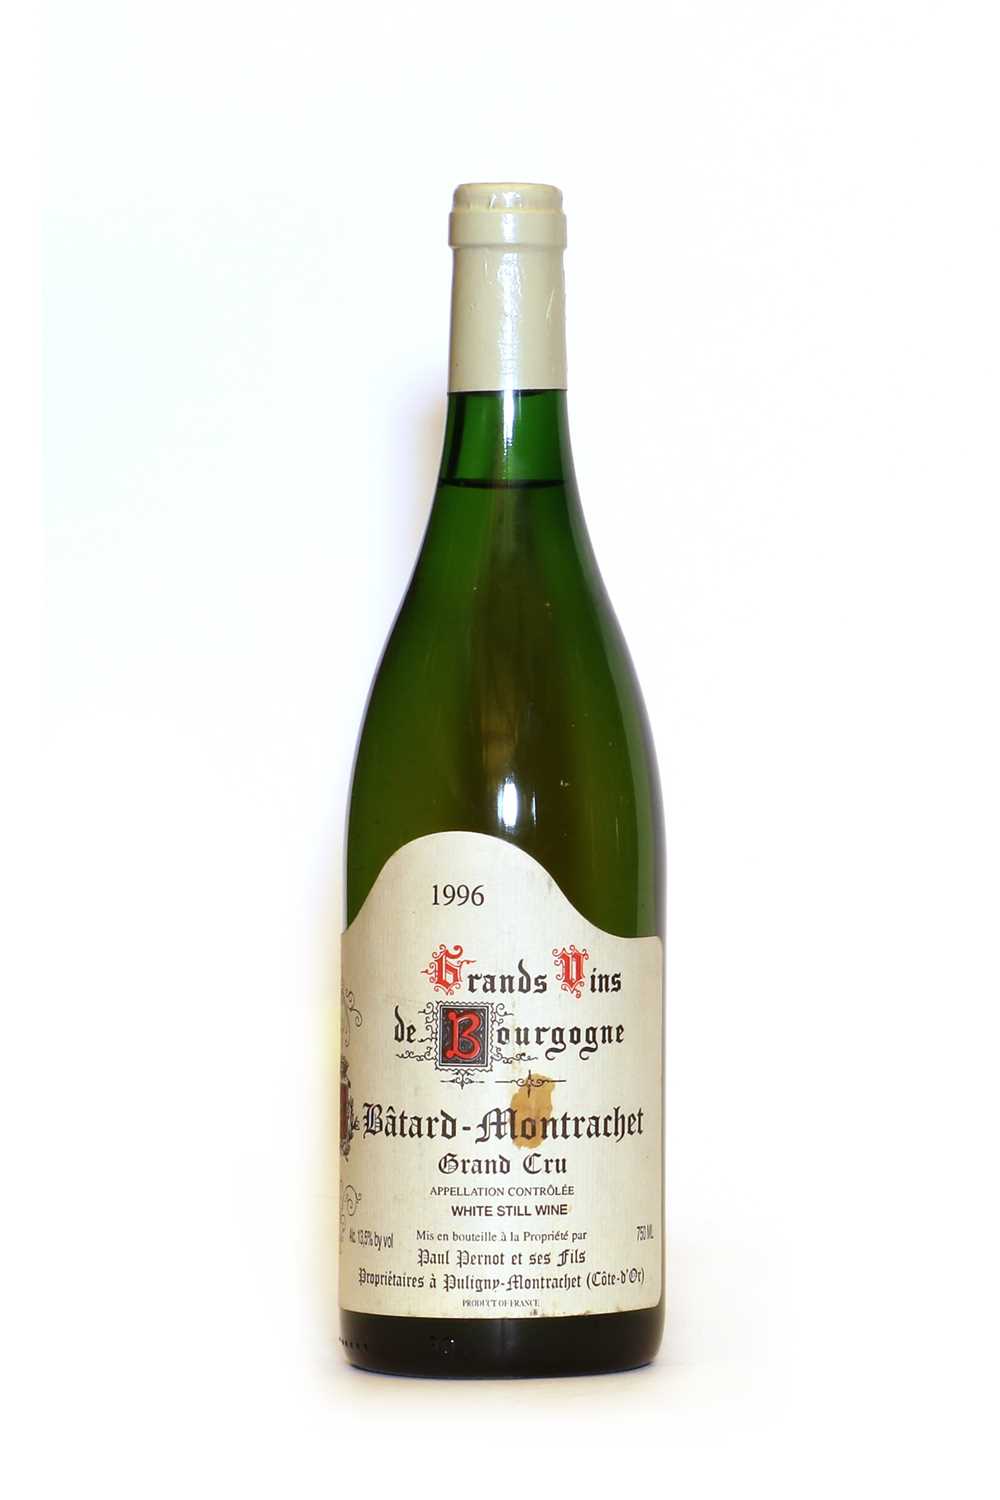 Lot 36 - Batard Montrachet, Grand Cru, Domaine Paul Pernot, 1996, one bottle